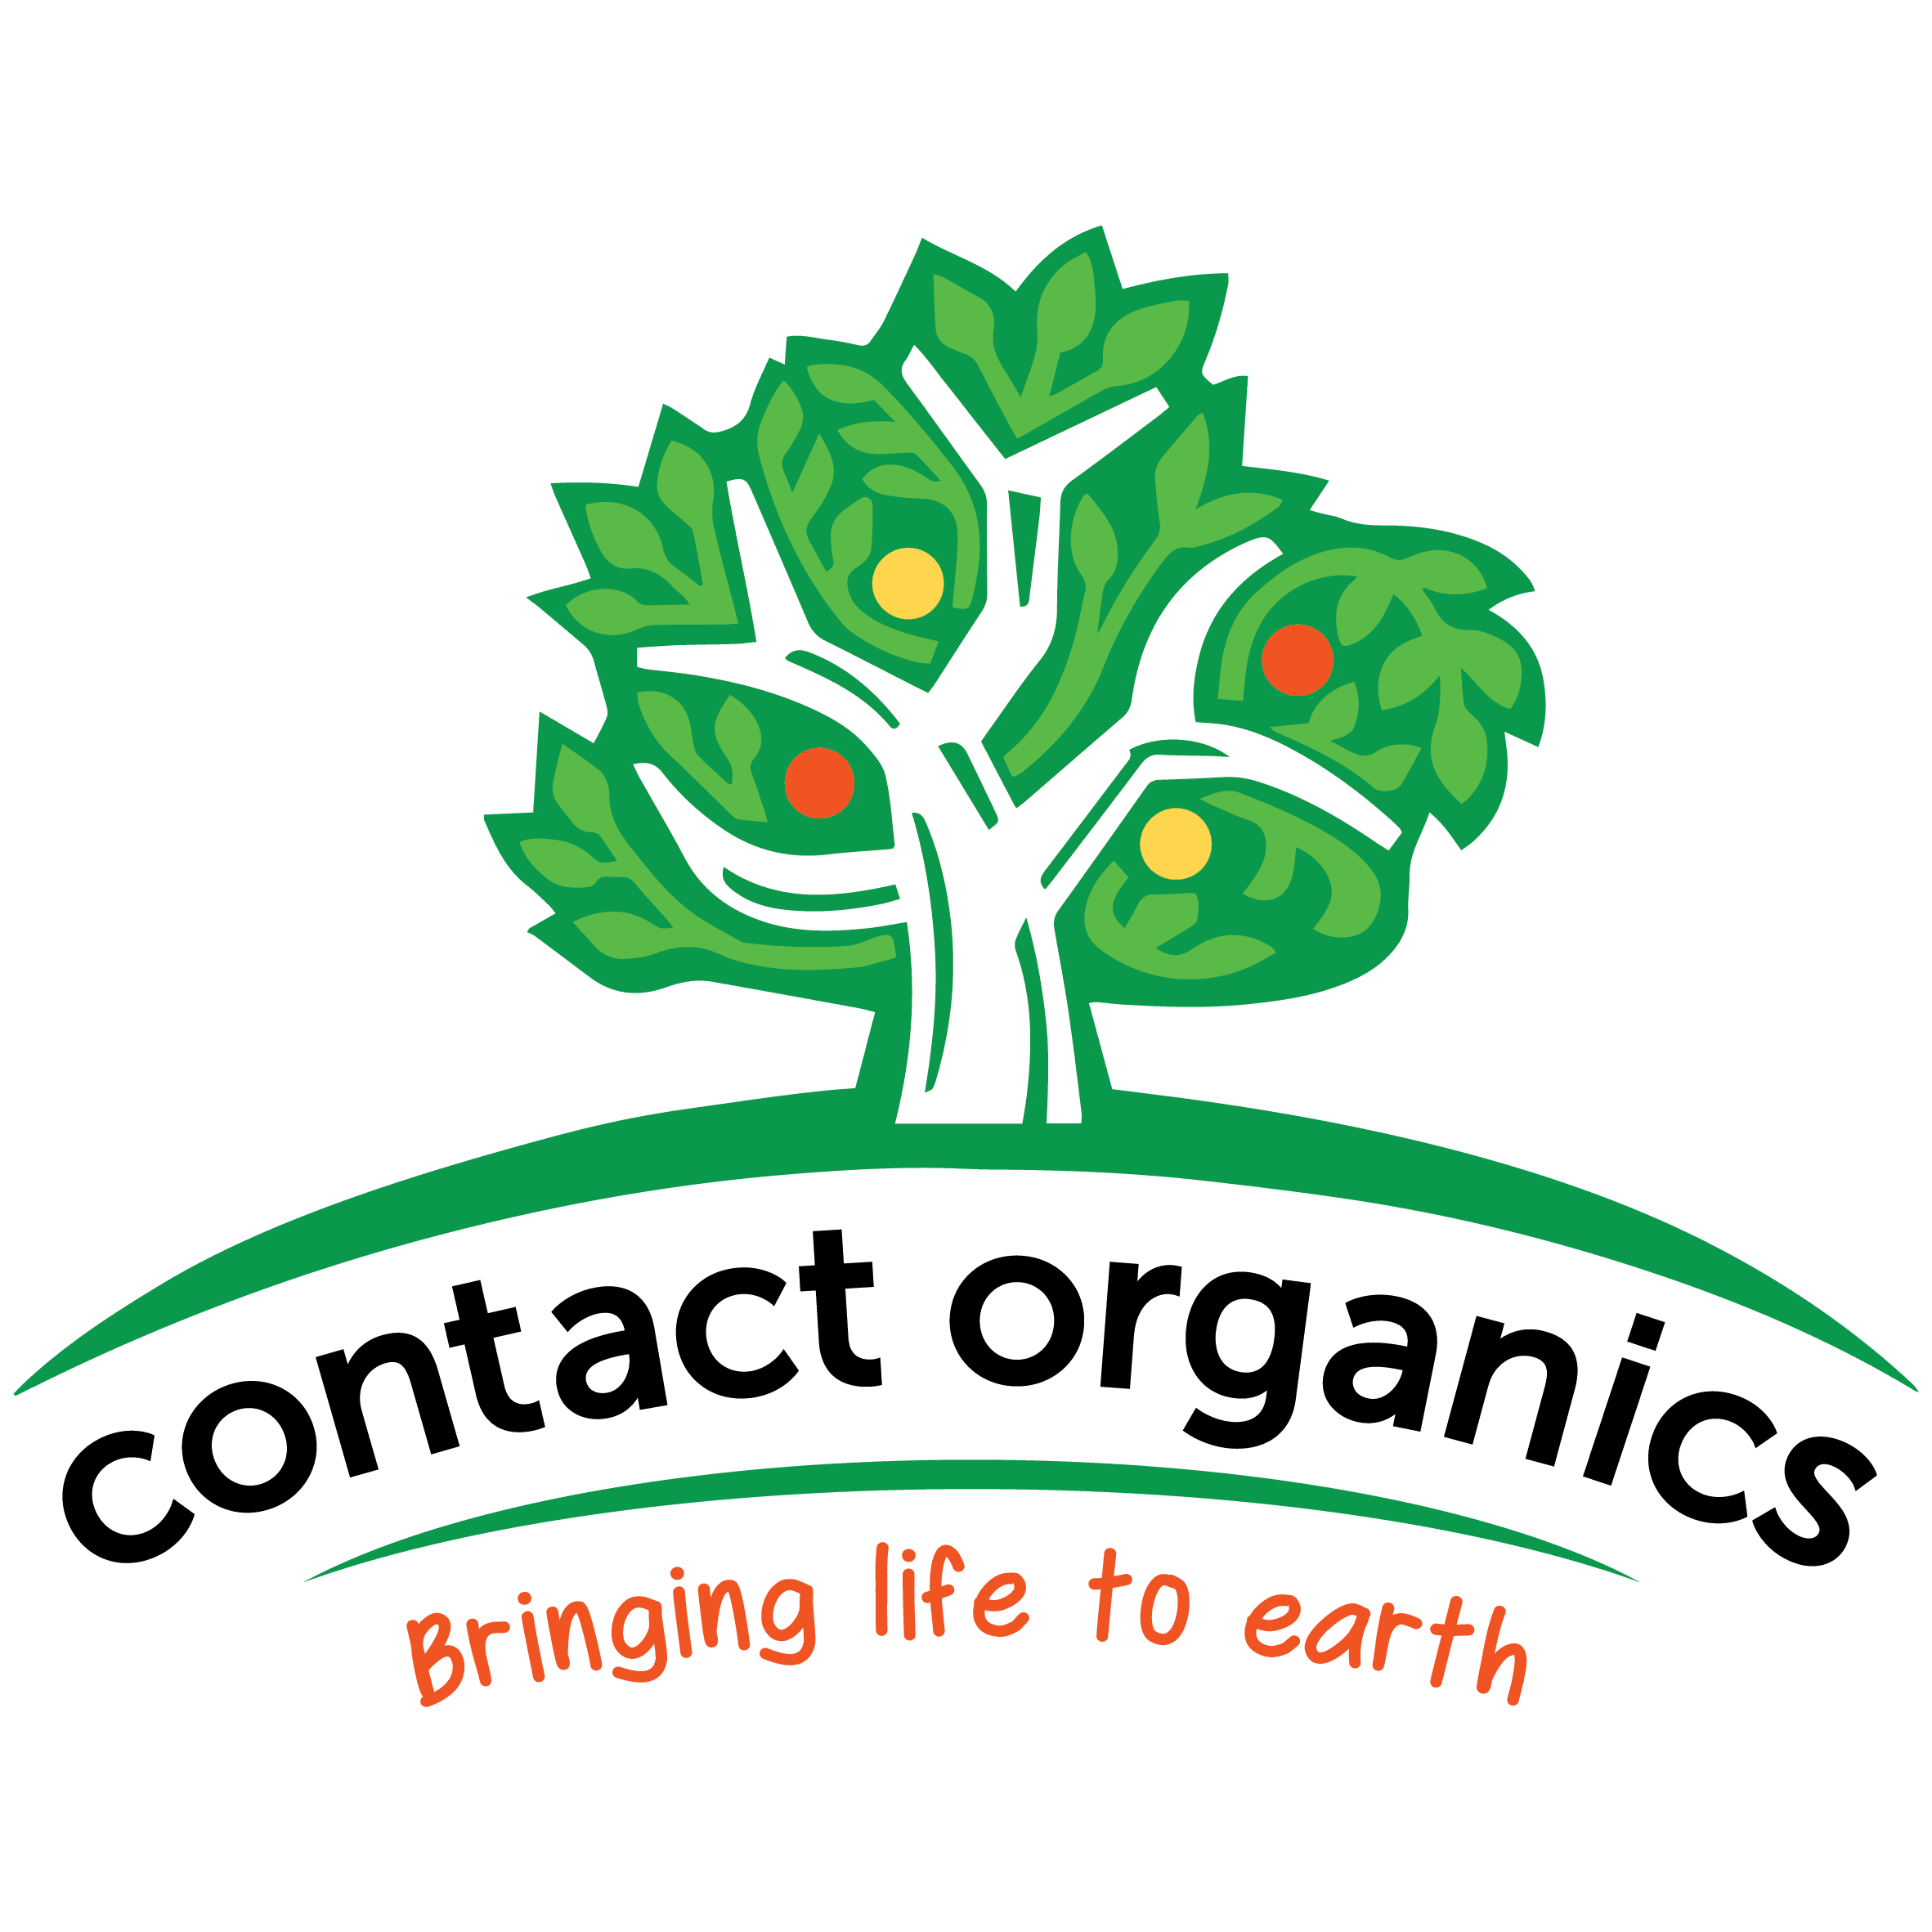 Contact Organics